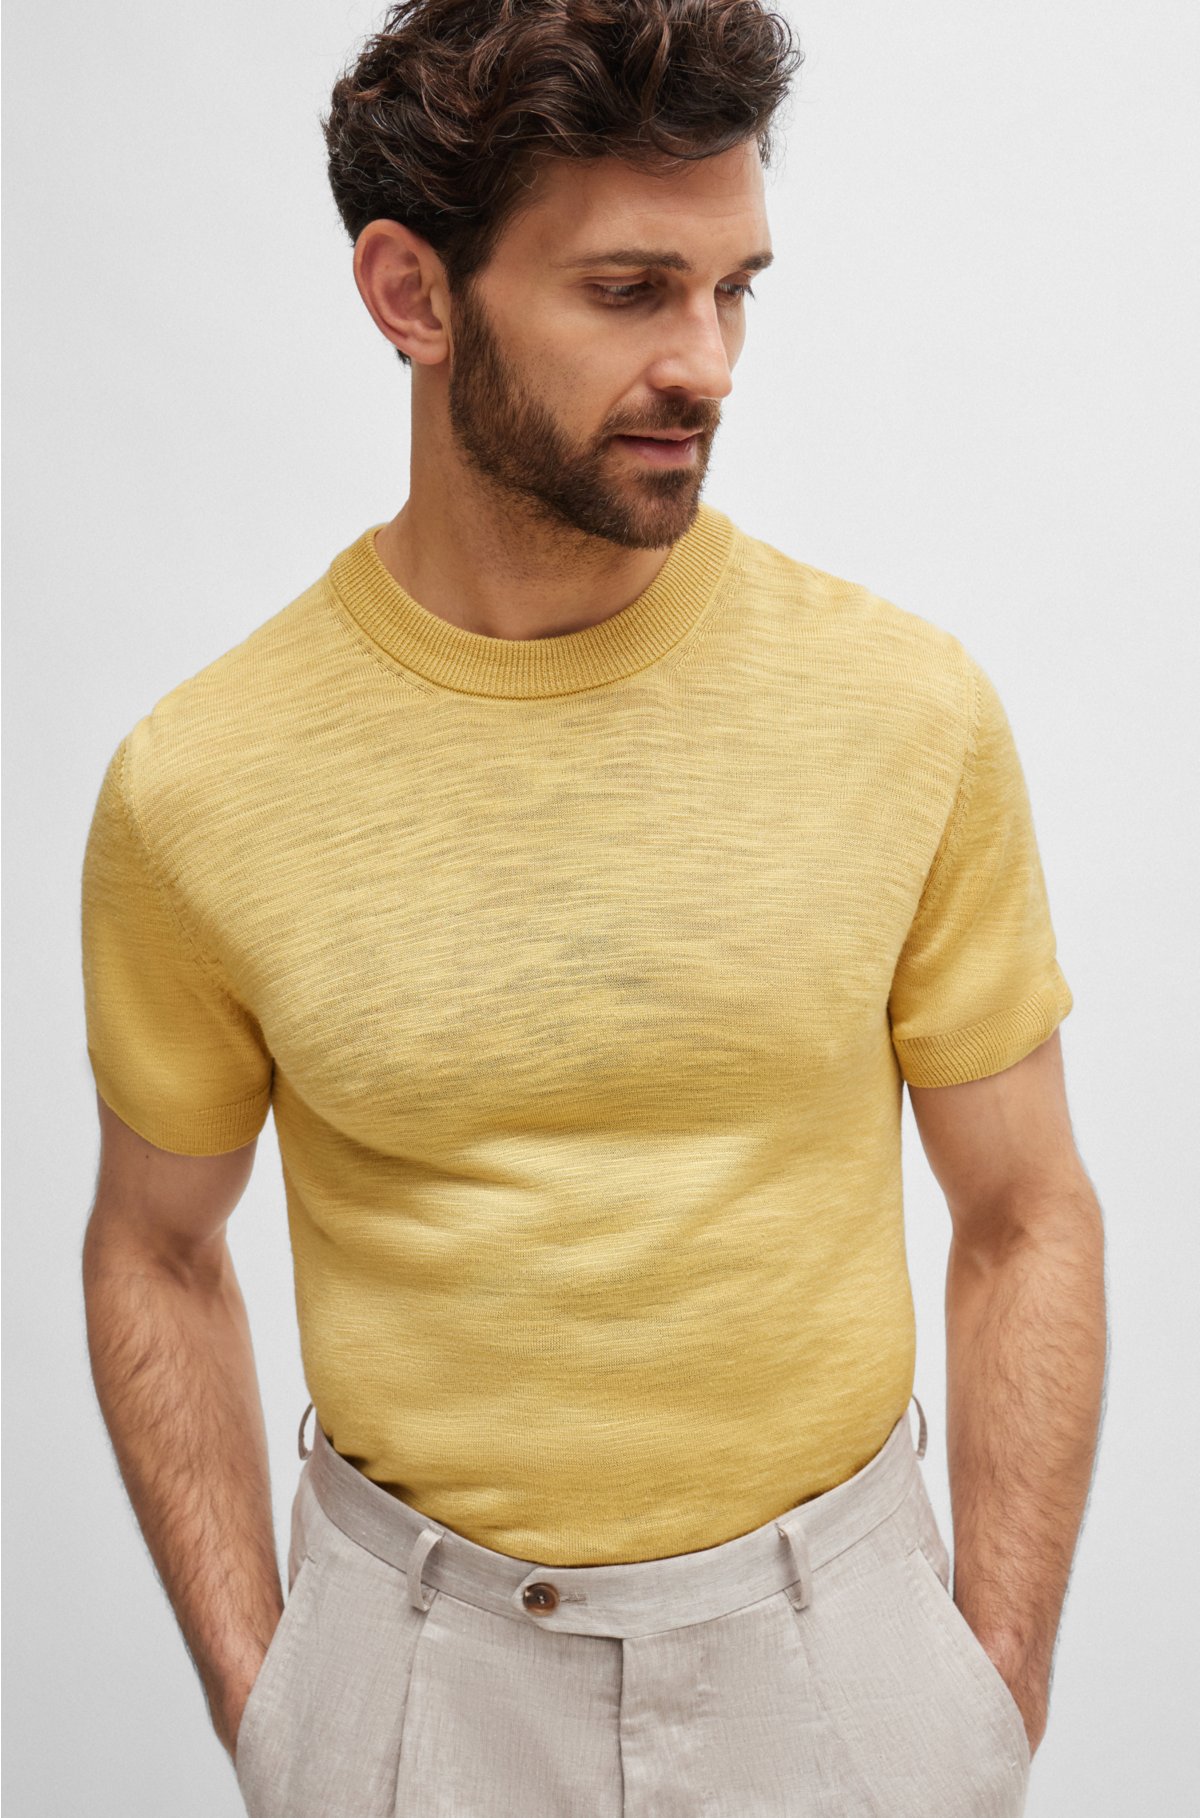 Short-sleeved sweater in Tussah silk, Light Yellow